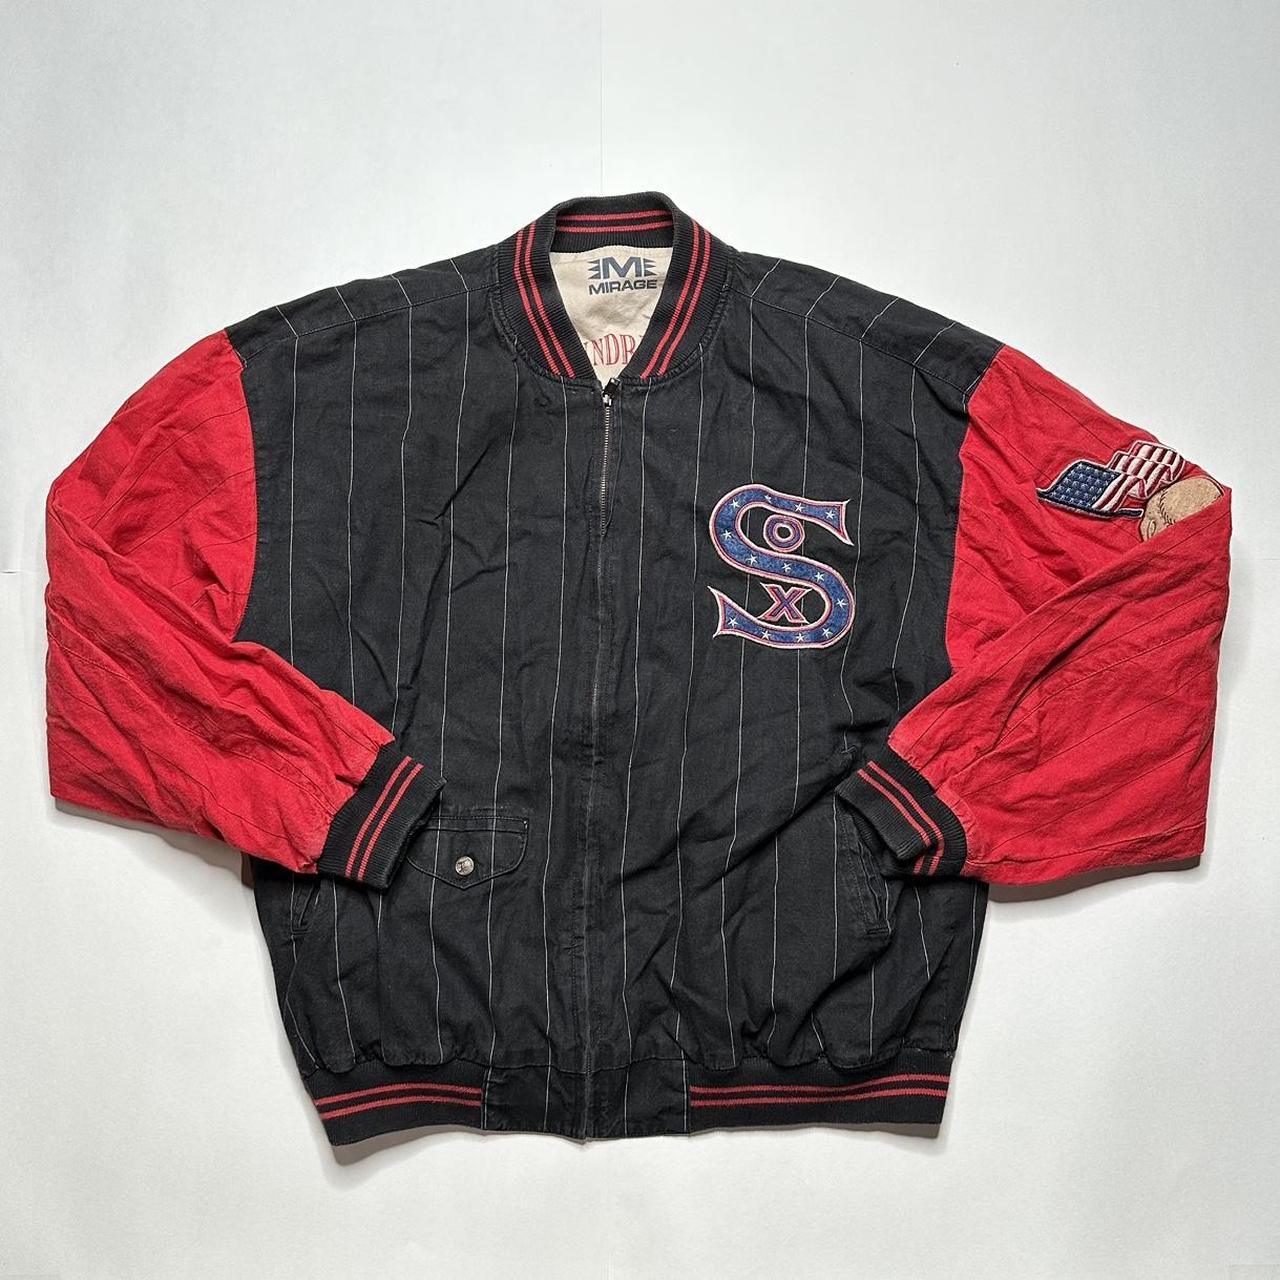 Vintage 1991 Mirage Chicago White Sox Jacket - Depop